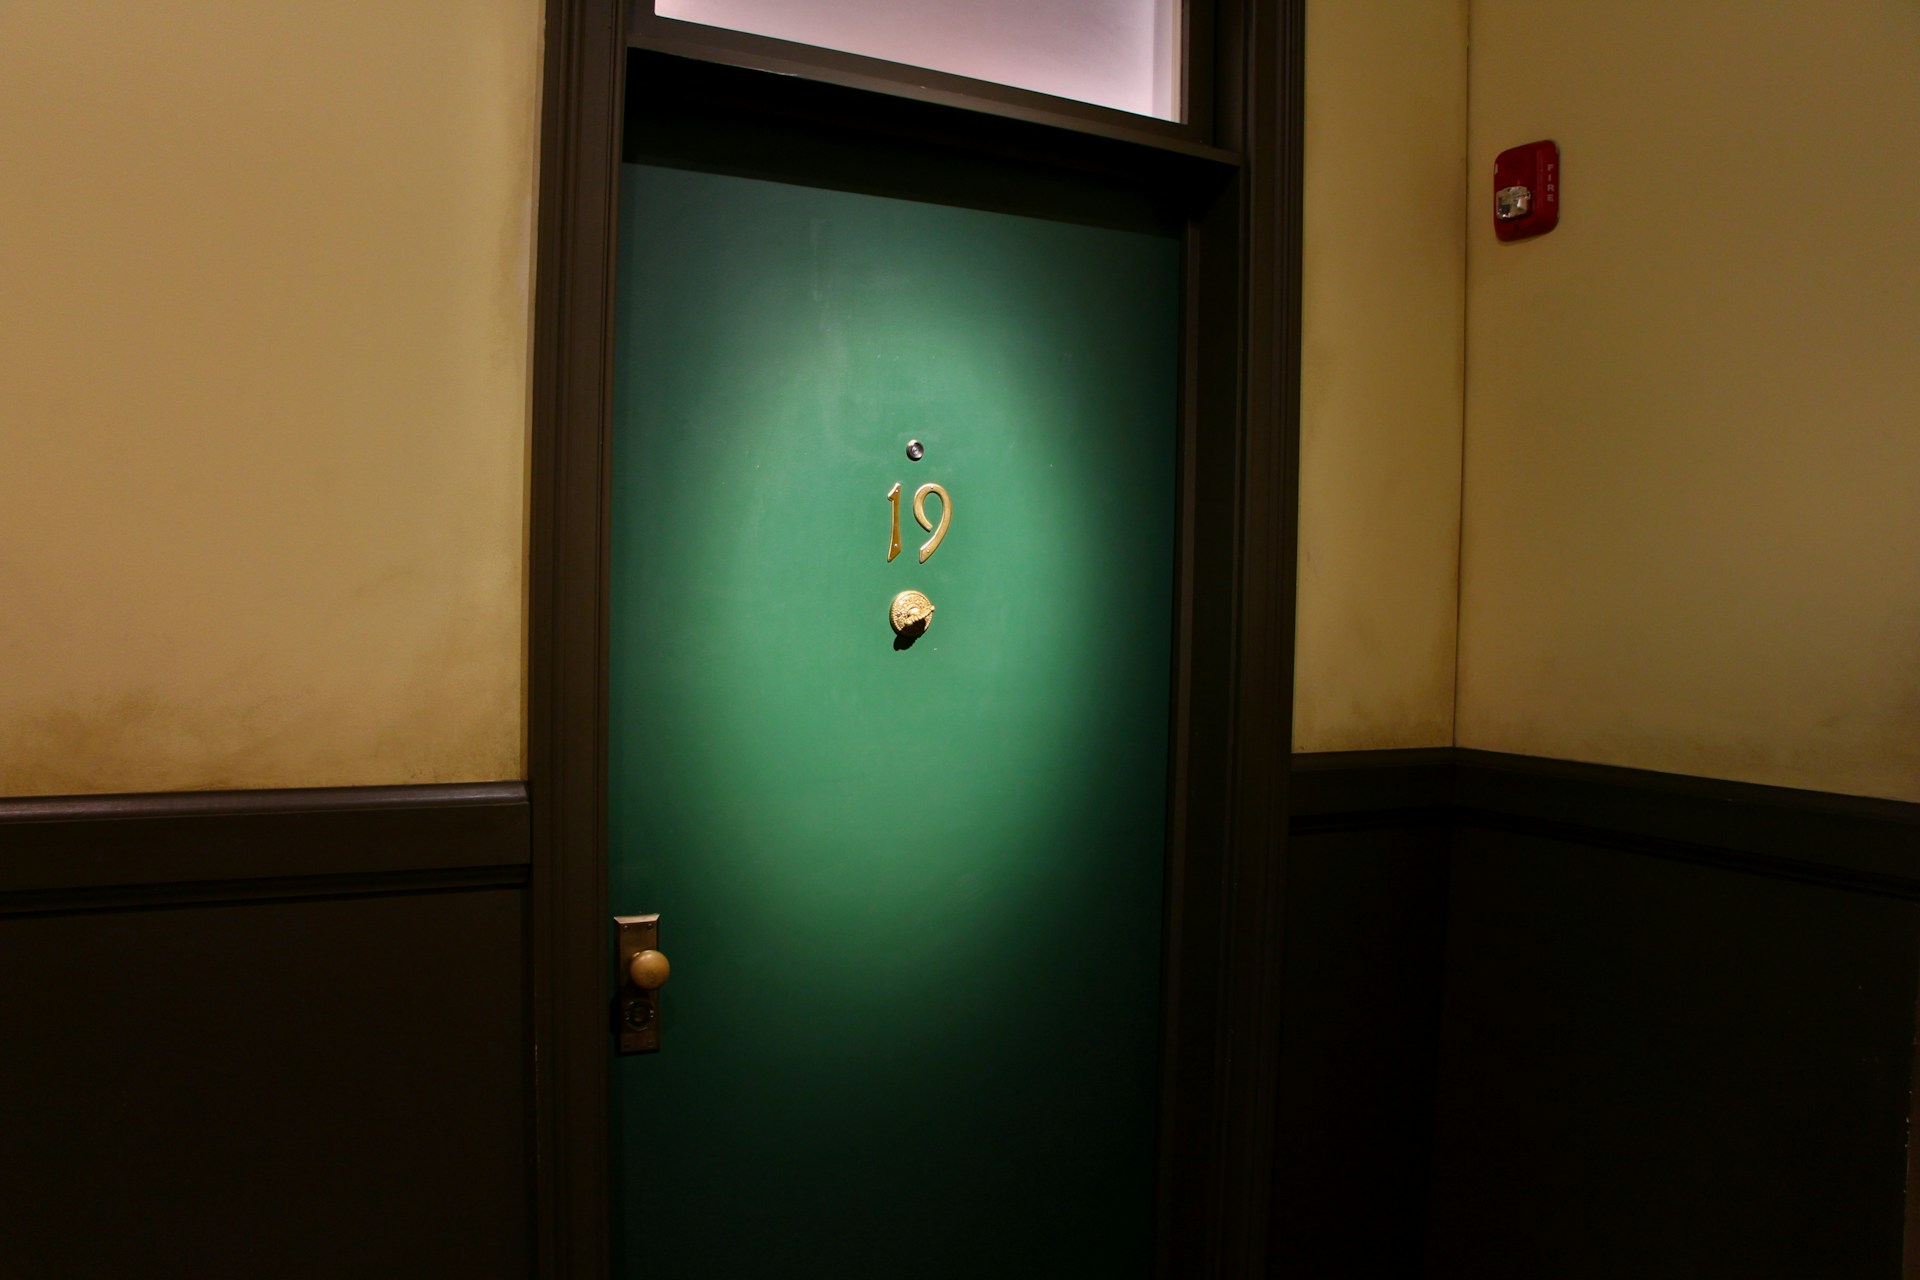 The door of Joey and Chandler's apartment in Friends